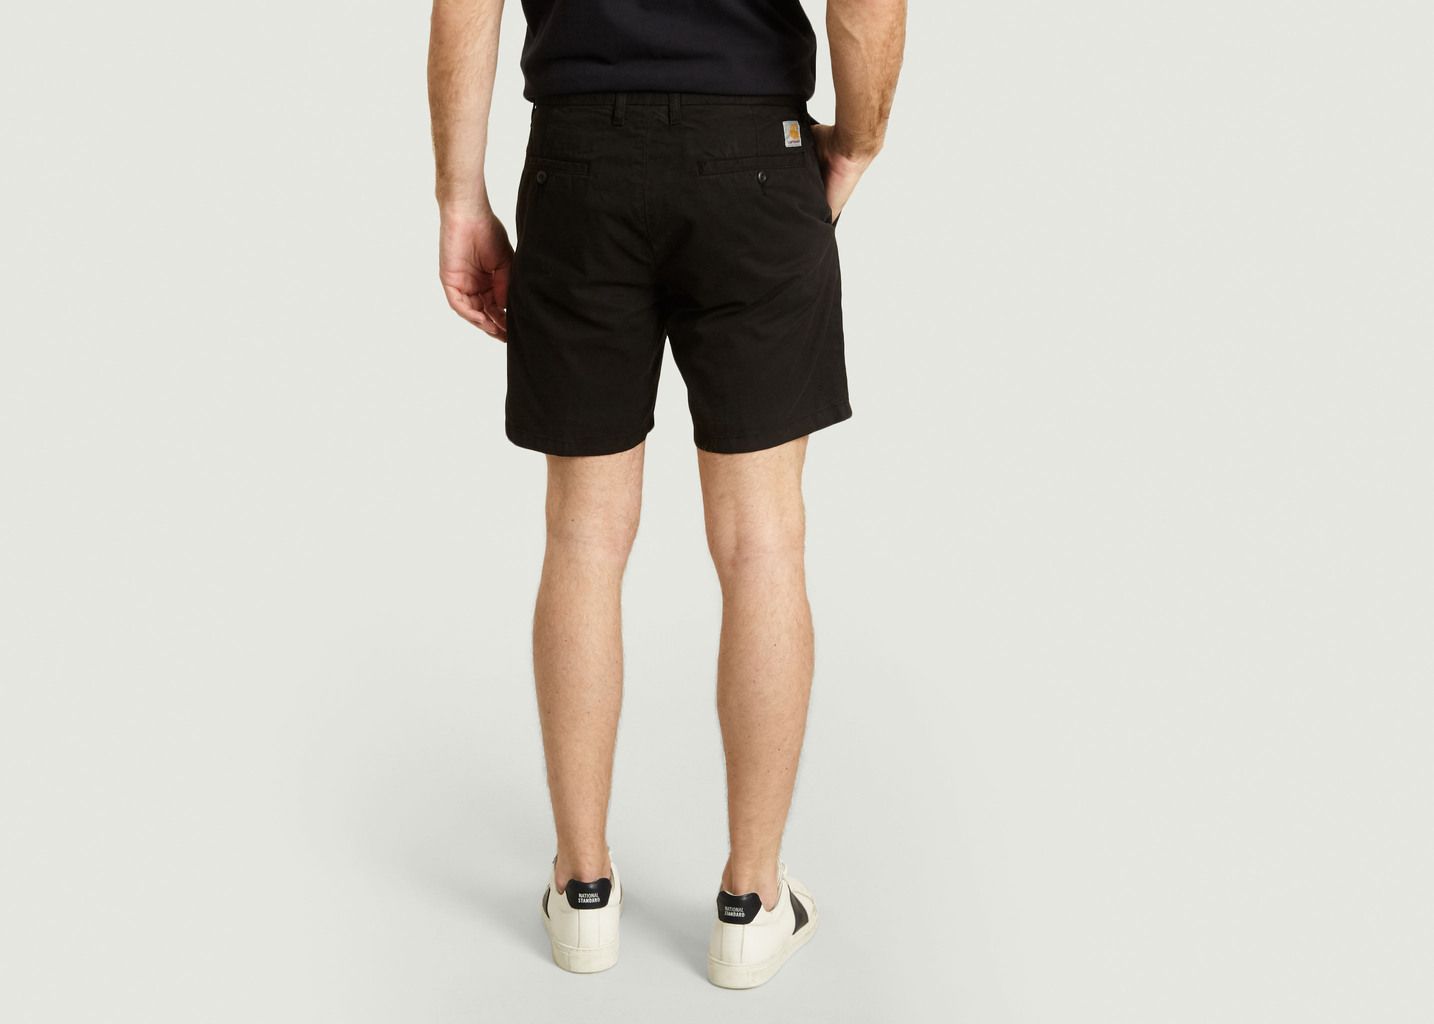 John cotton shorts - Carhartt WIP